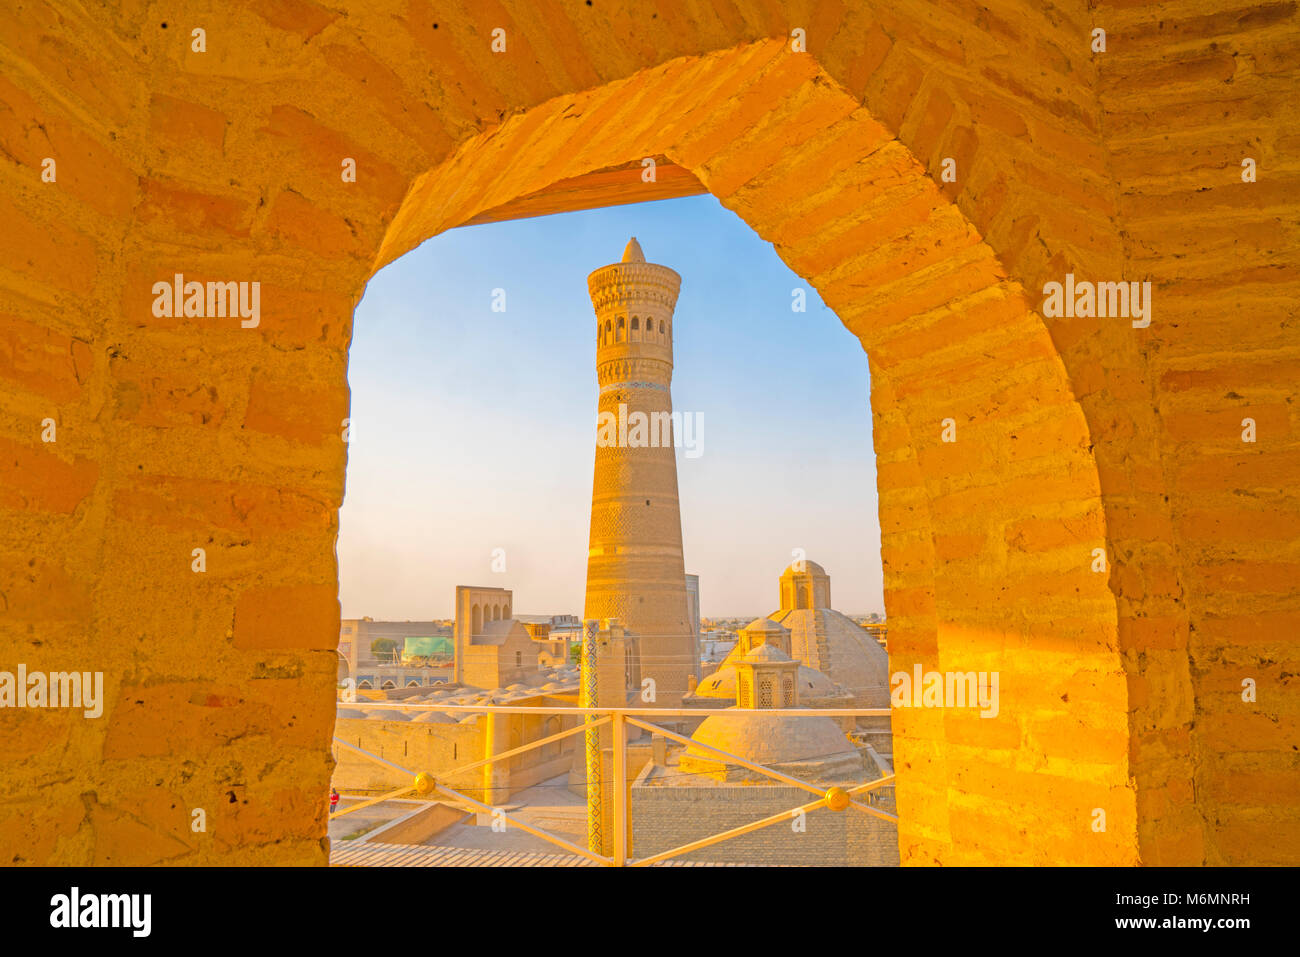 Fenster framing Kalon Minarett, Buchara, Usbekistan, gebaut 1127, das älteste Gebäude in Zentralasien Stockfoto